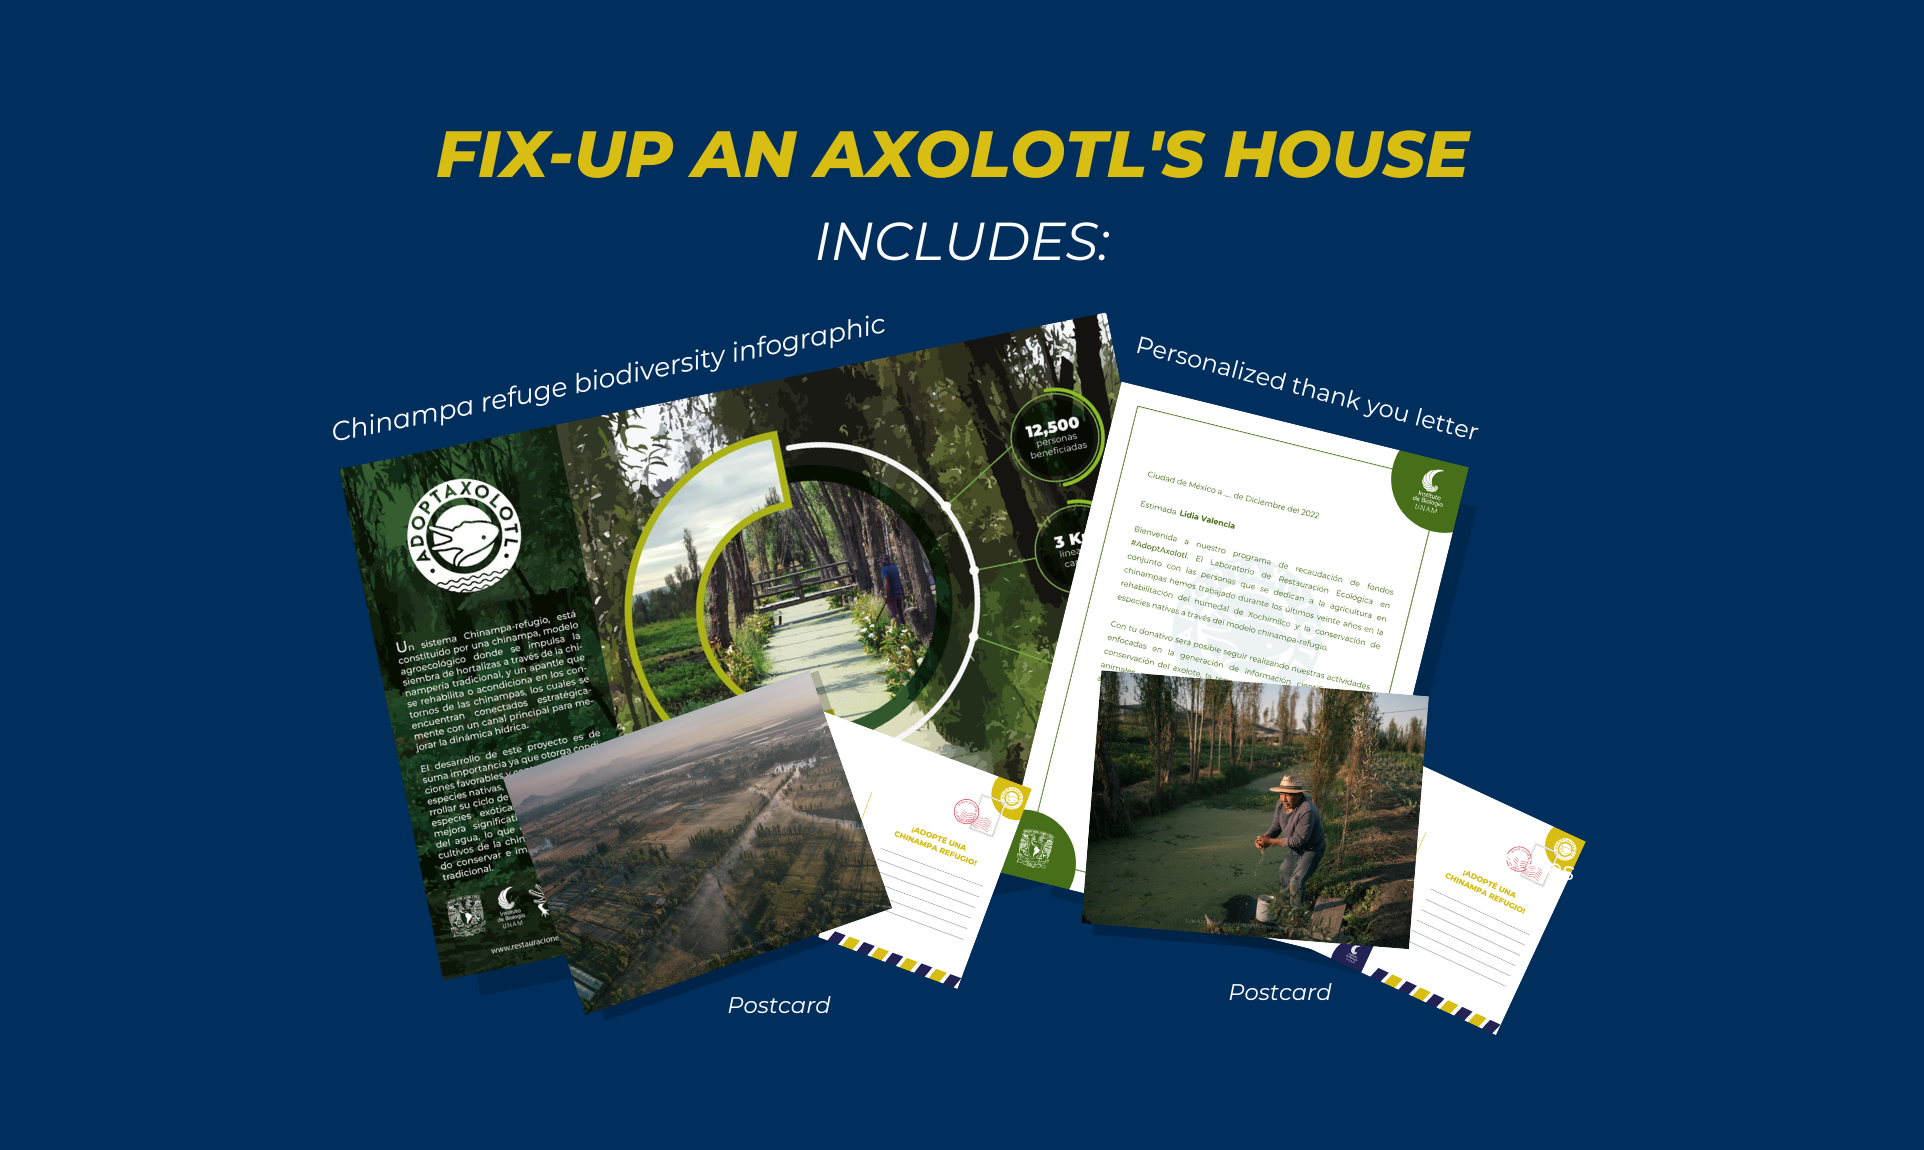 Adoptaxolotl - Adopt a refuge: Pimp-up an axolotl house